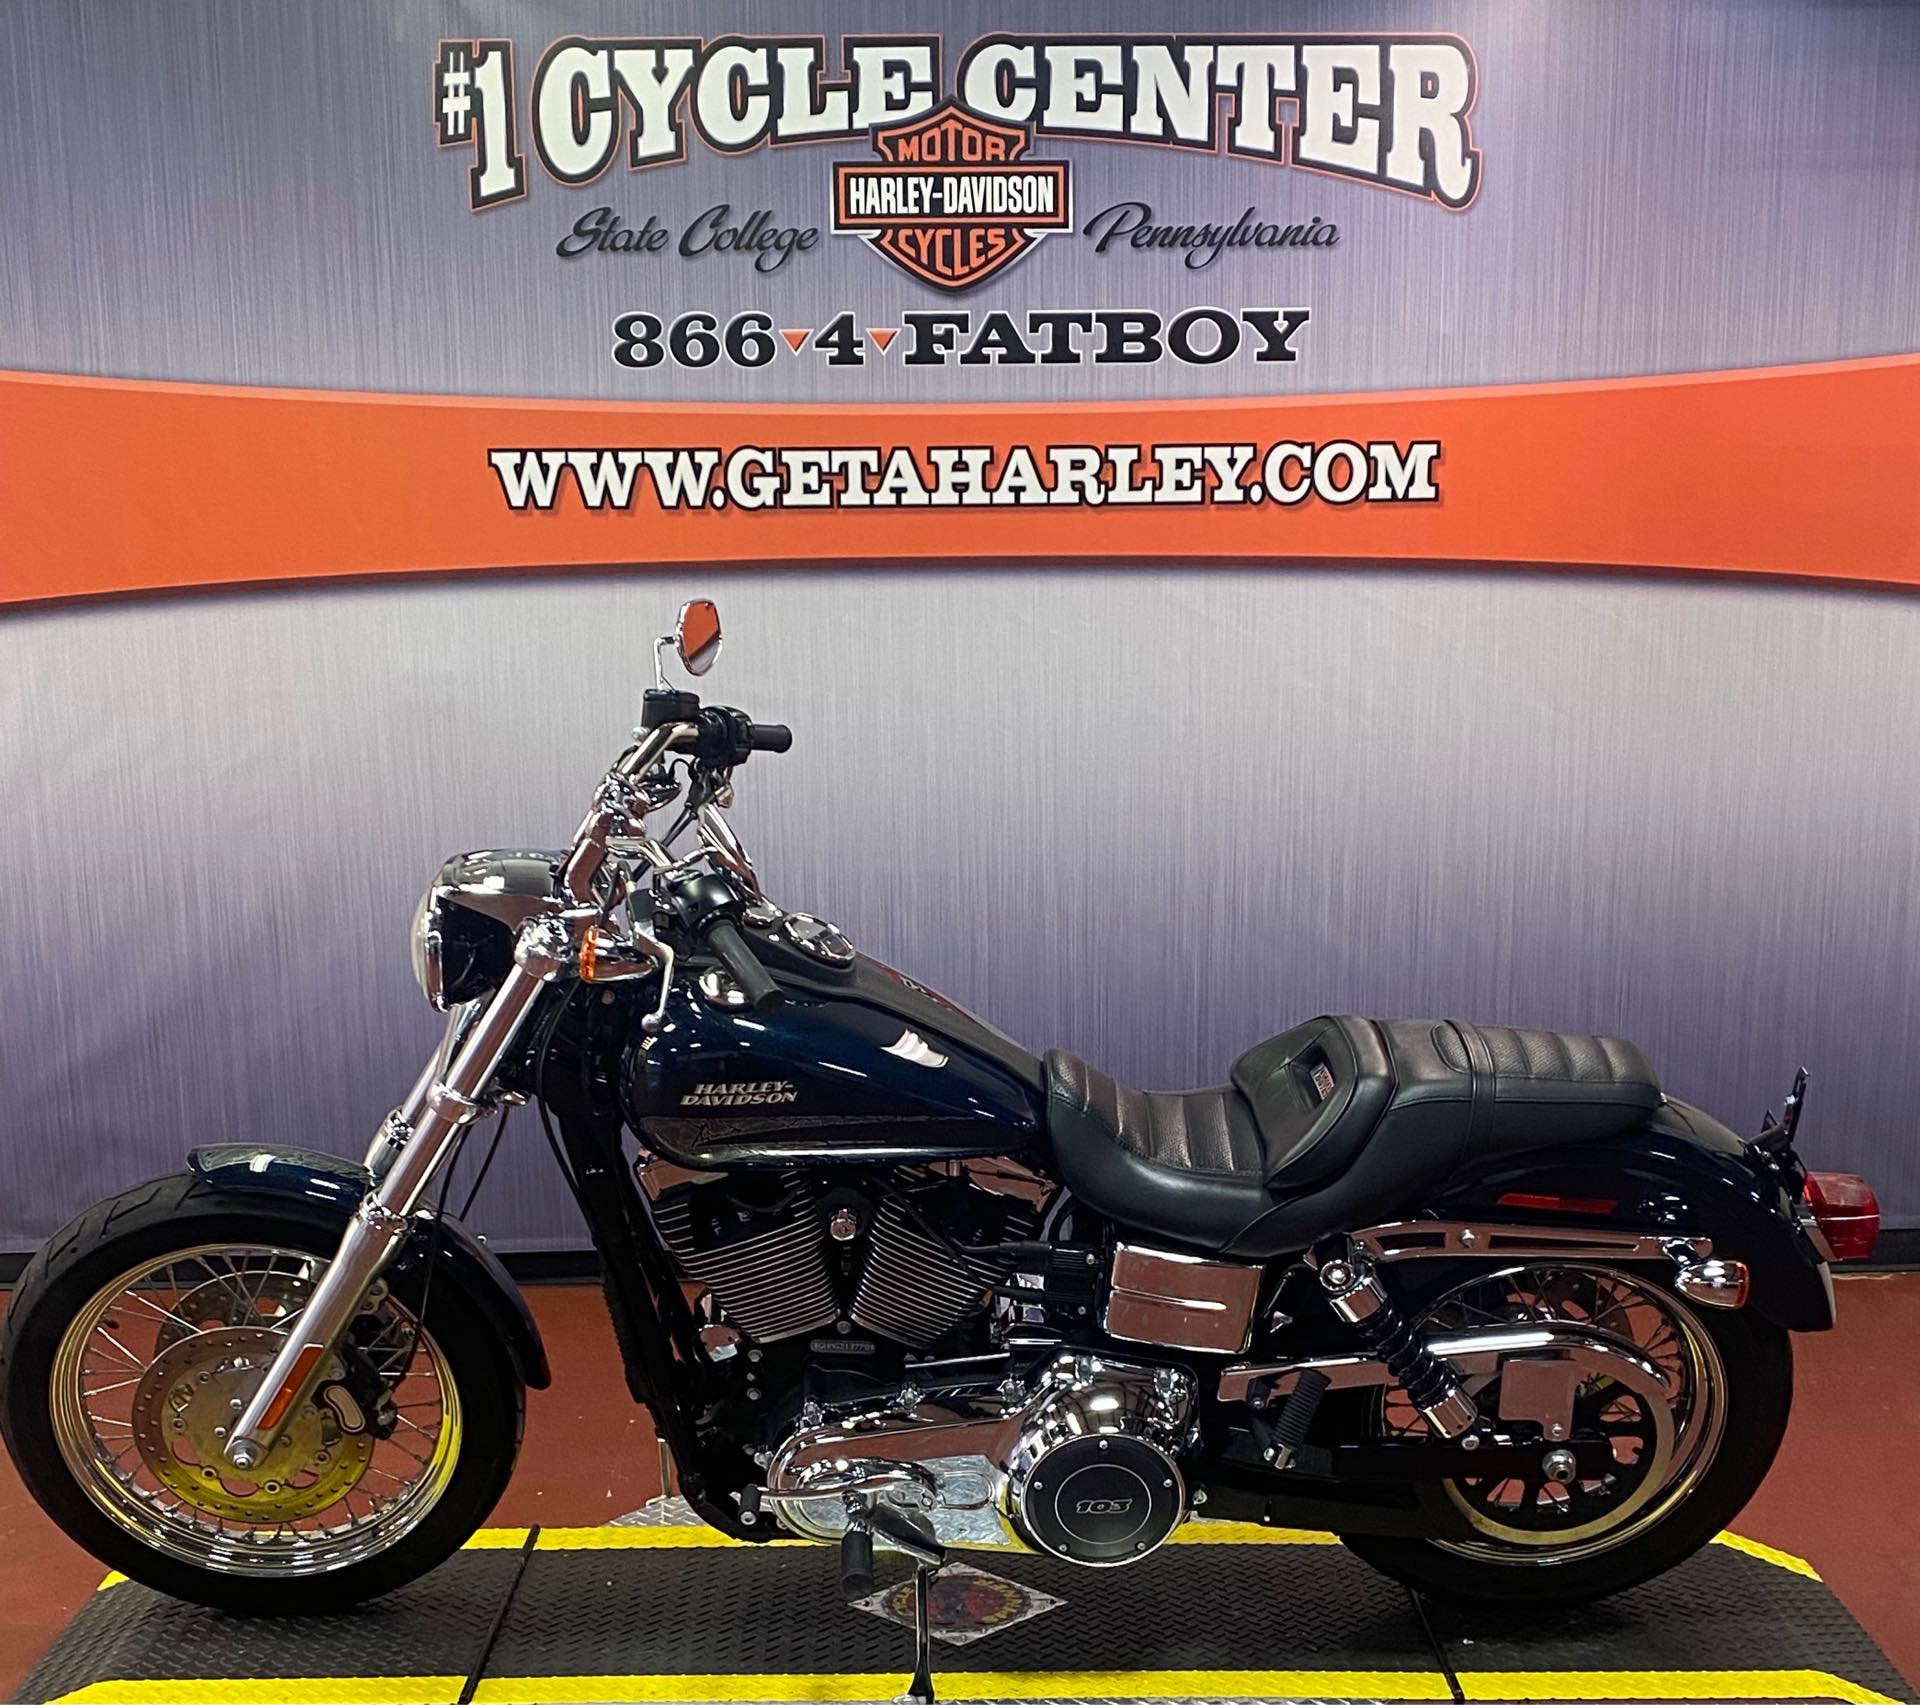 2016 Harley-Davidson Dyna Low Rider at #1 Cycle Center Harley-Davidson